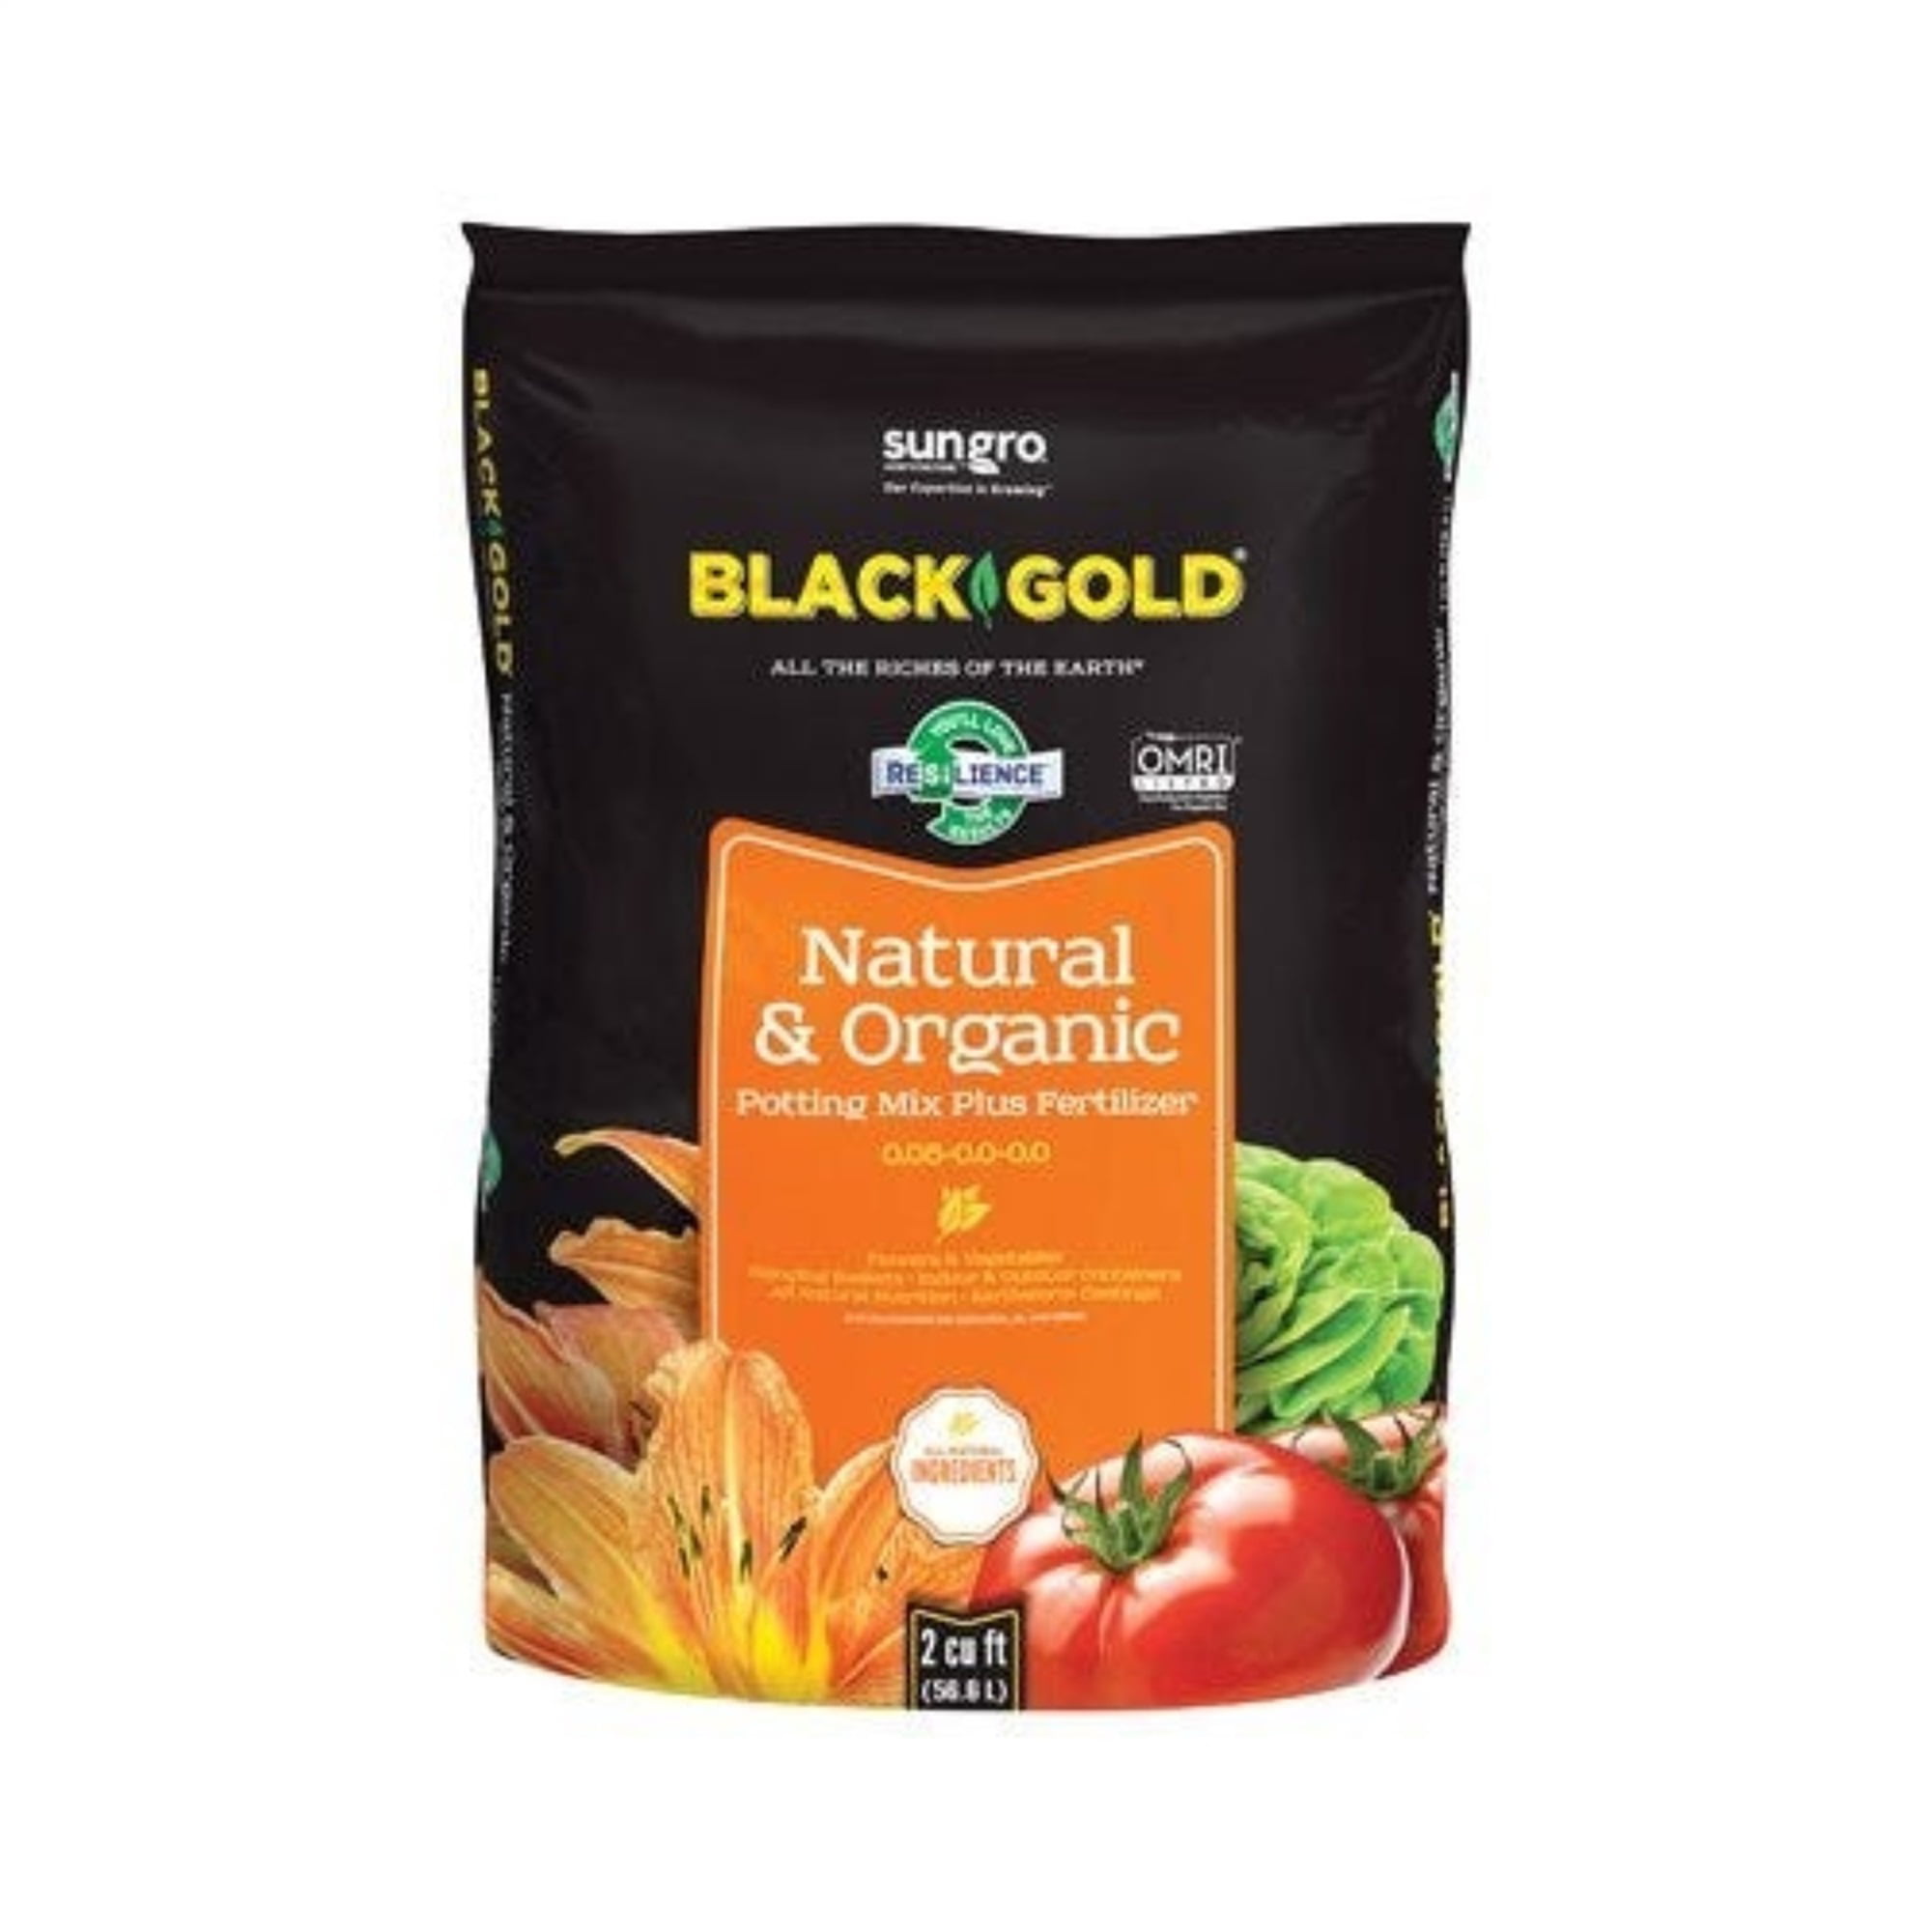 2 Cubic Feet SunGro Black Gold Natural and Organic Just Coir Soil Amendment Mix 